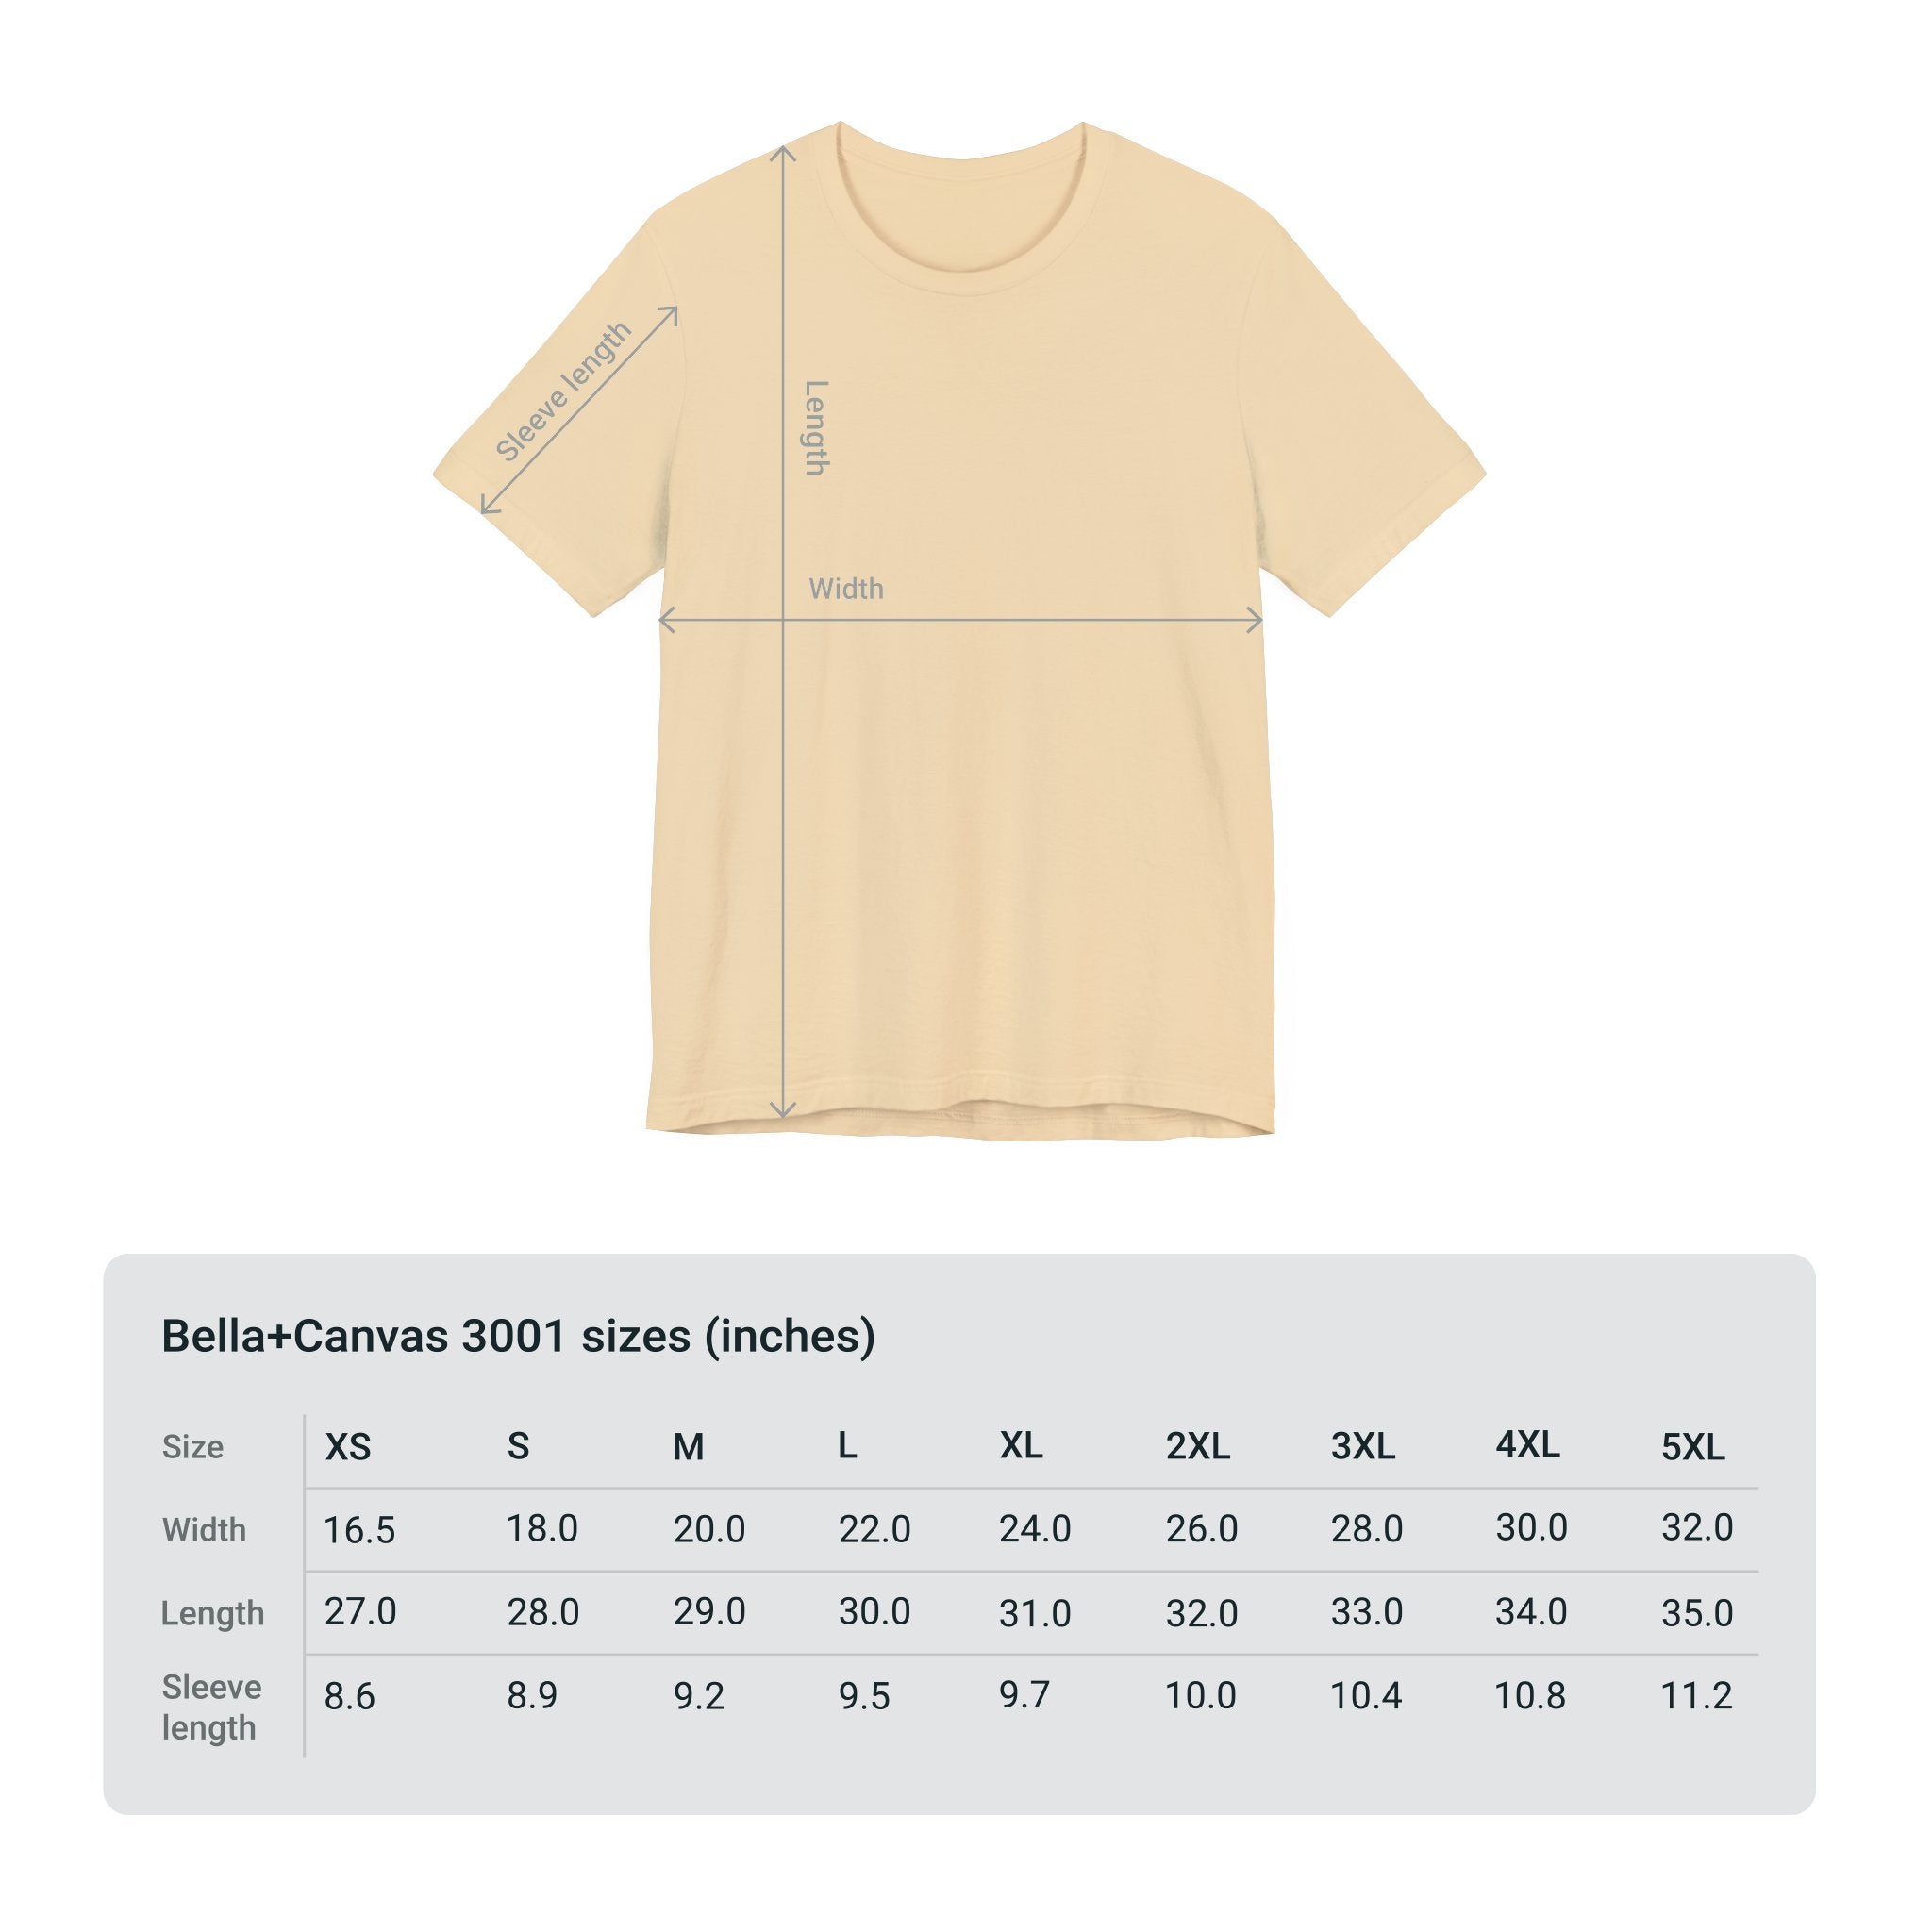 Custom Retro-a-go-go Series Camera & Flash Unisex Jersey Short Sleeve T-Shirt